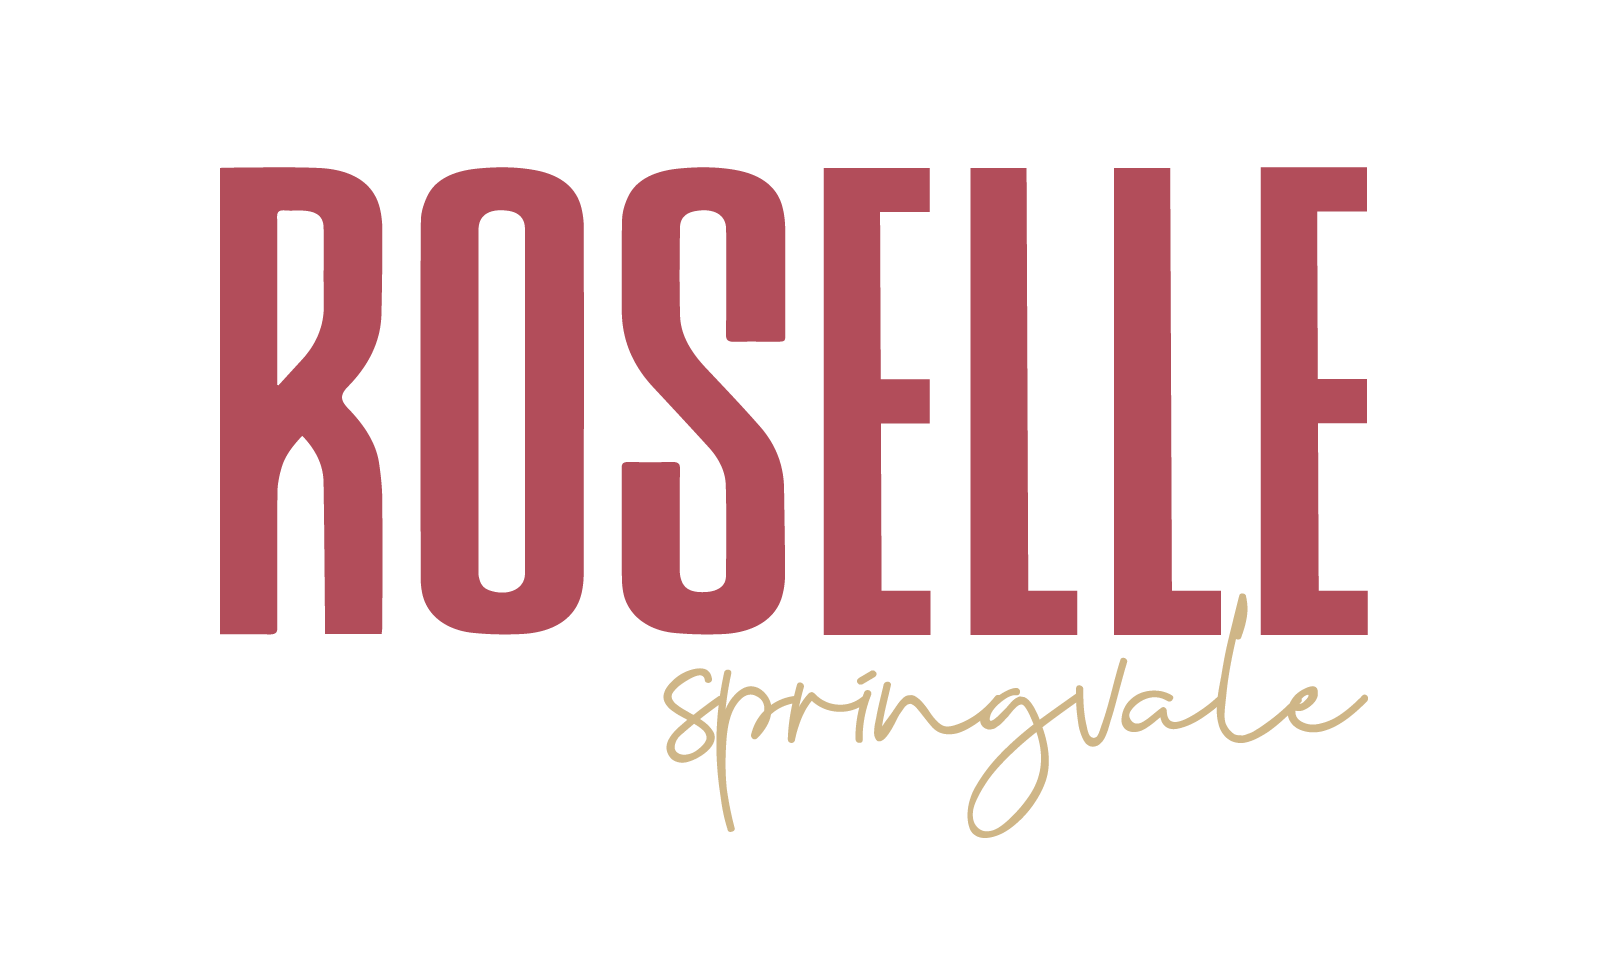 Roselle Springvale LOGO